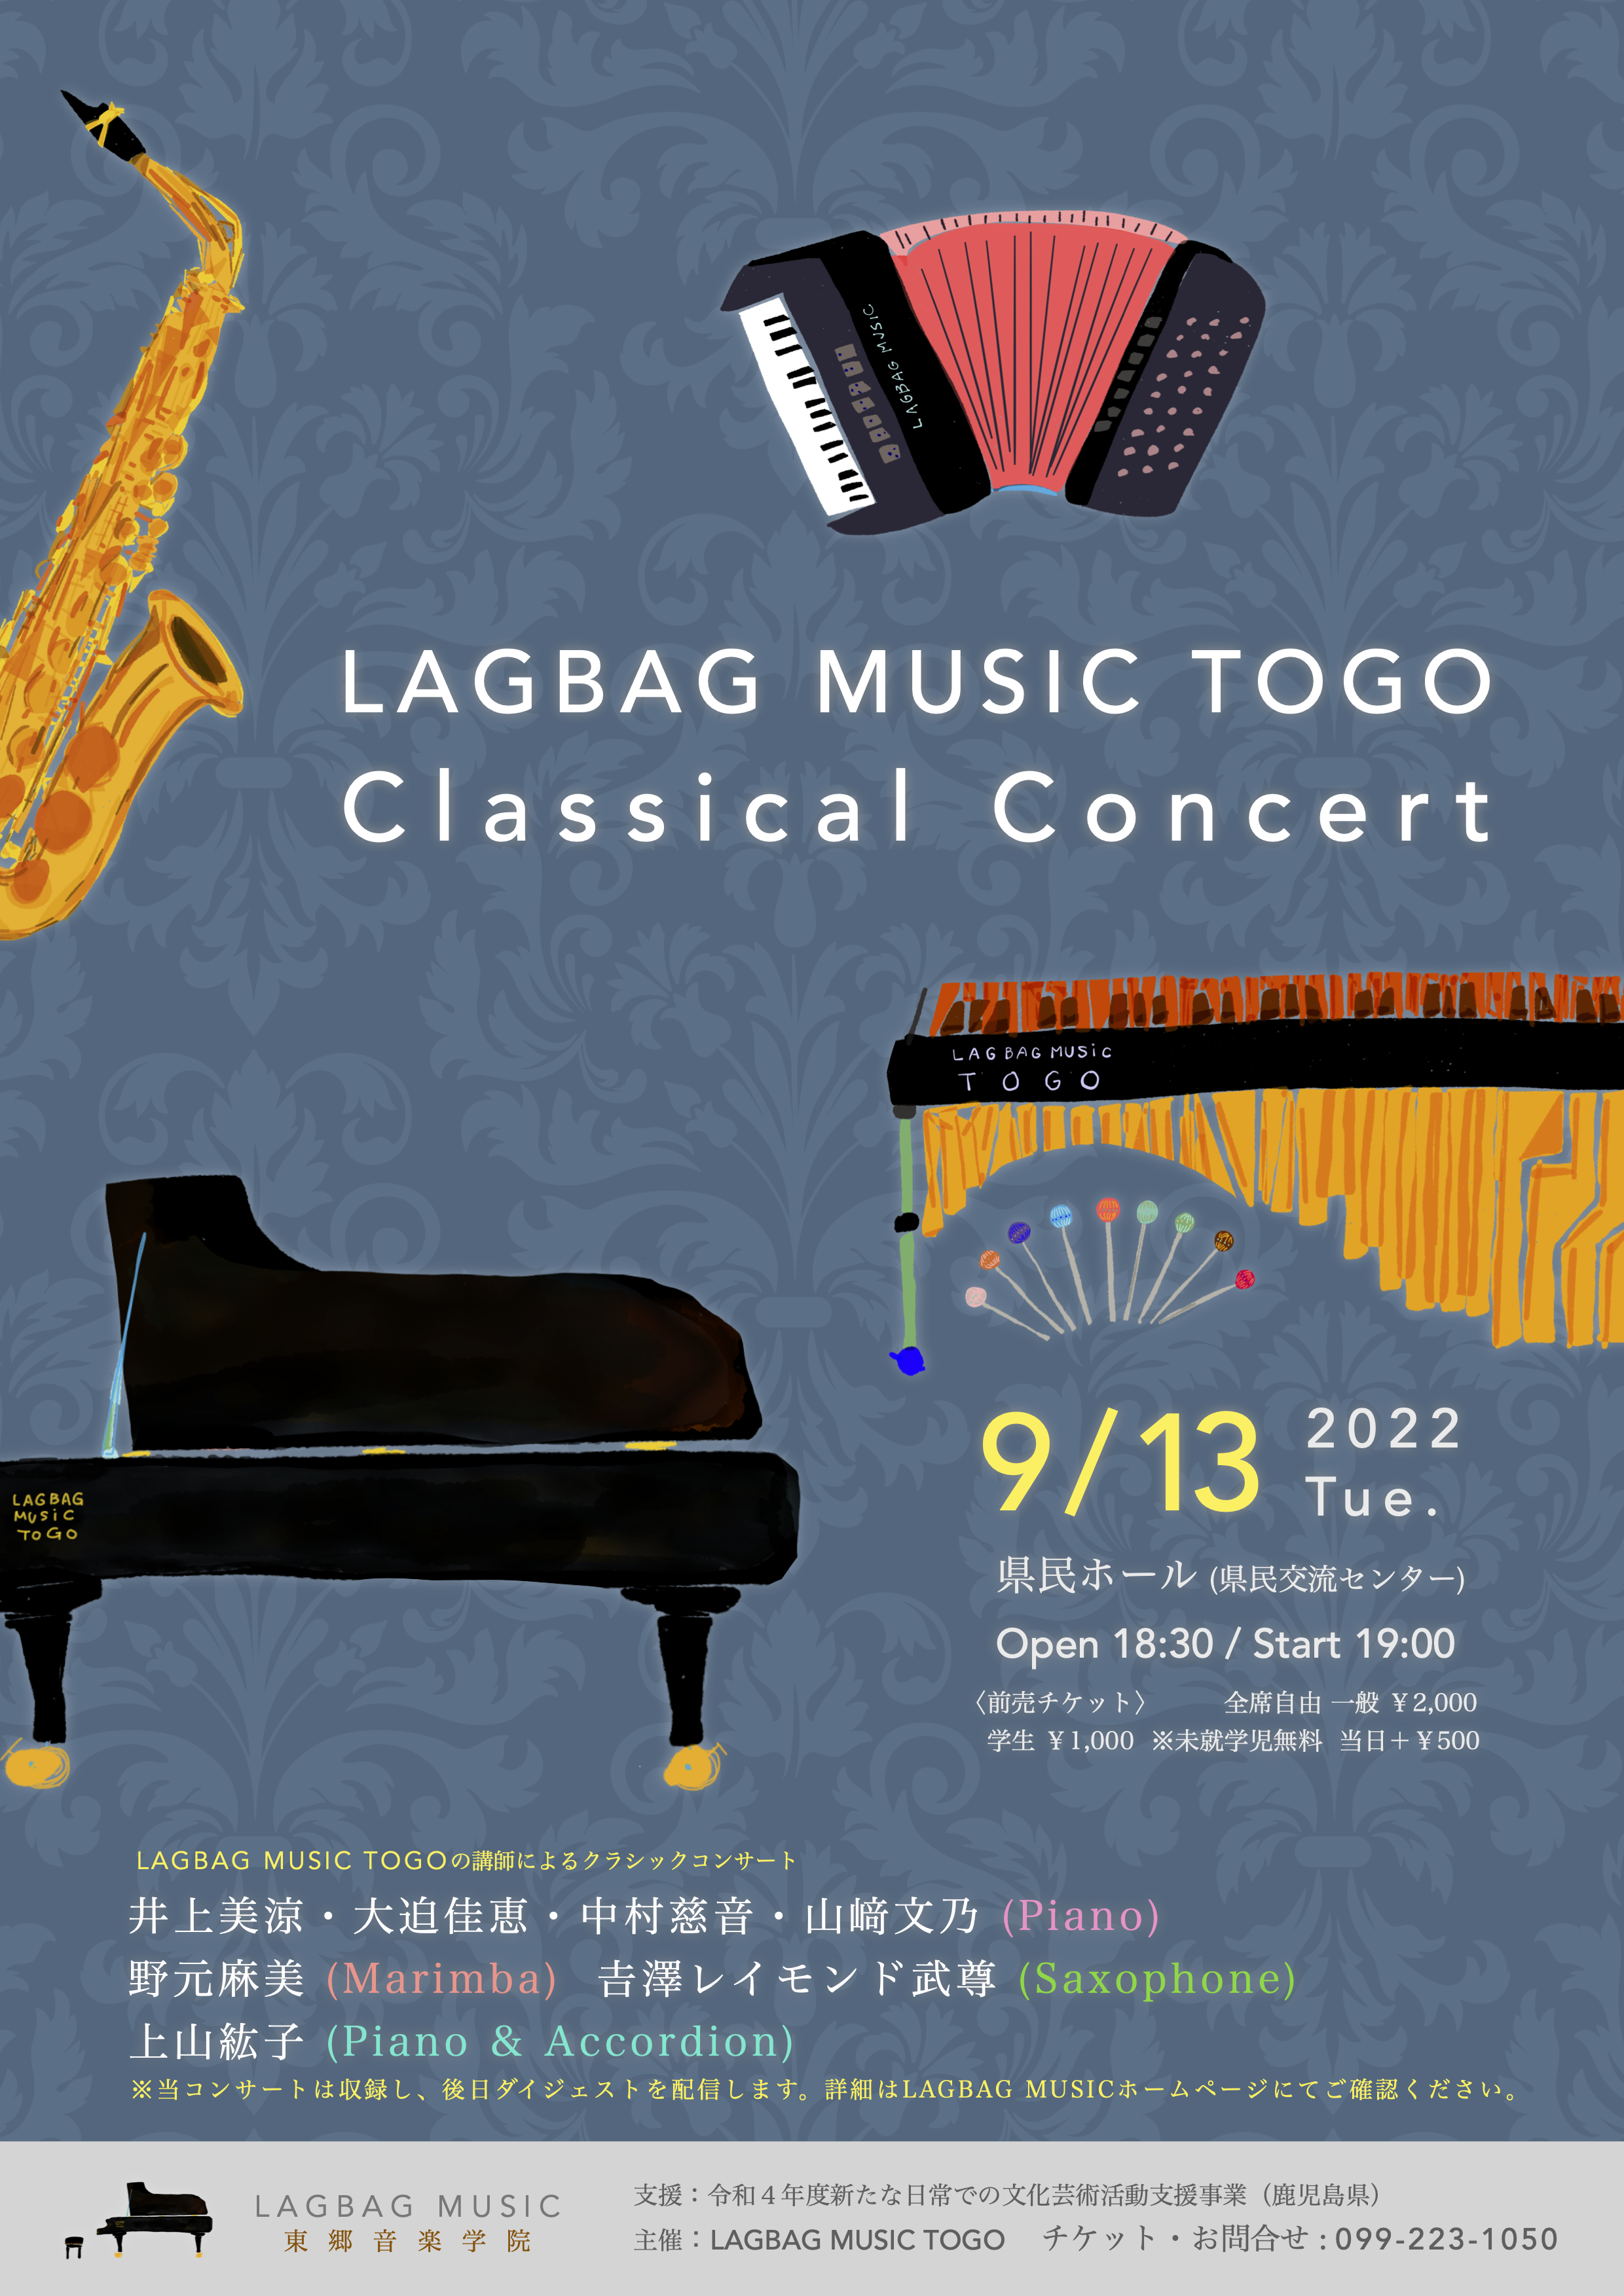 LAGBAG MUSIC TOGO Classical Concert 開催のお知らせ 